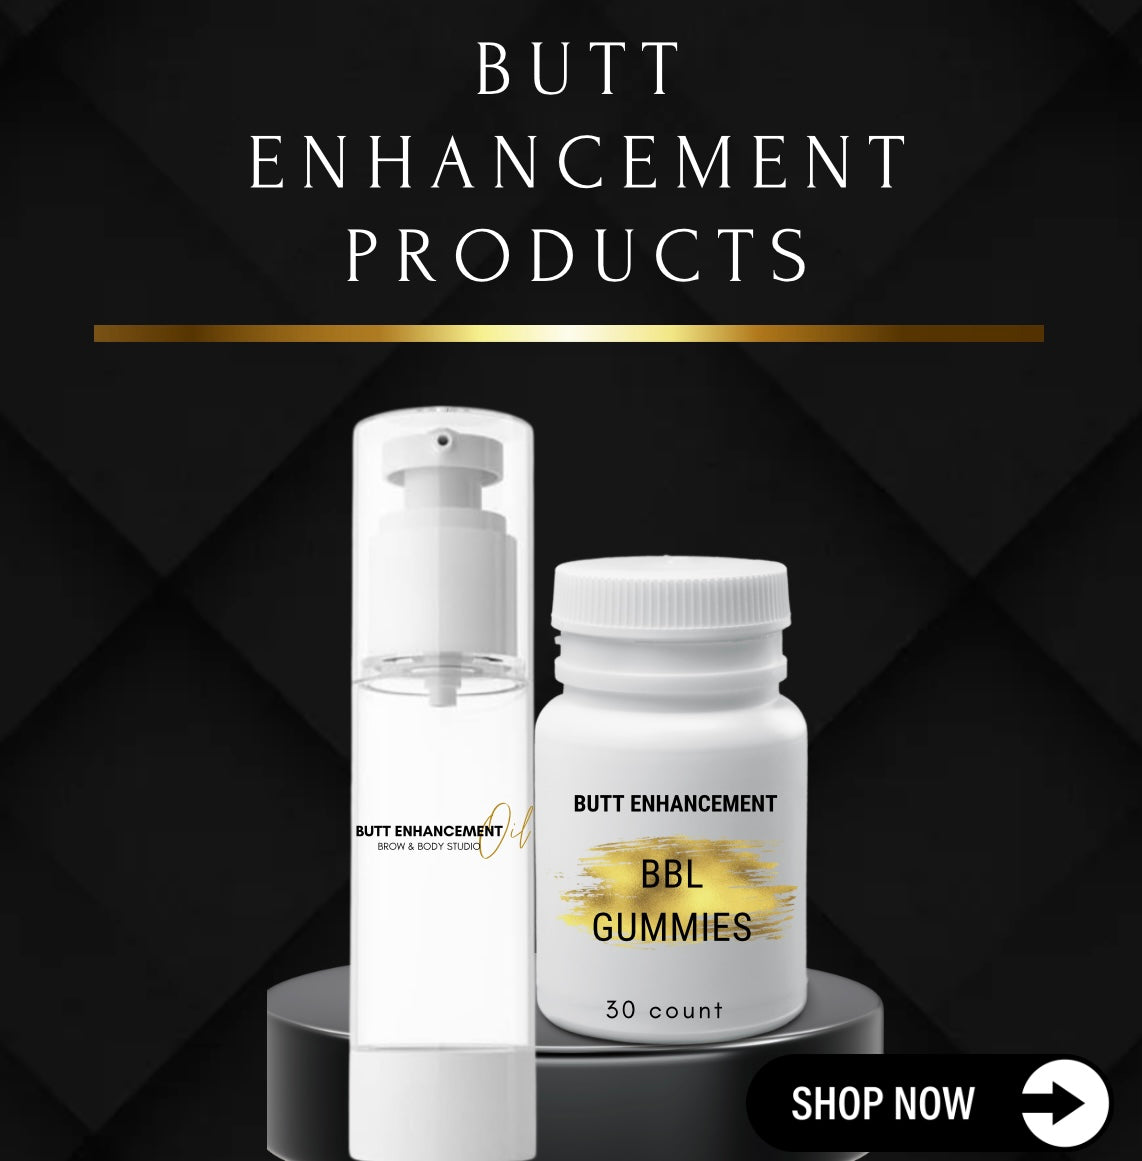 Butt Enhancement Products